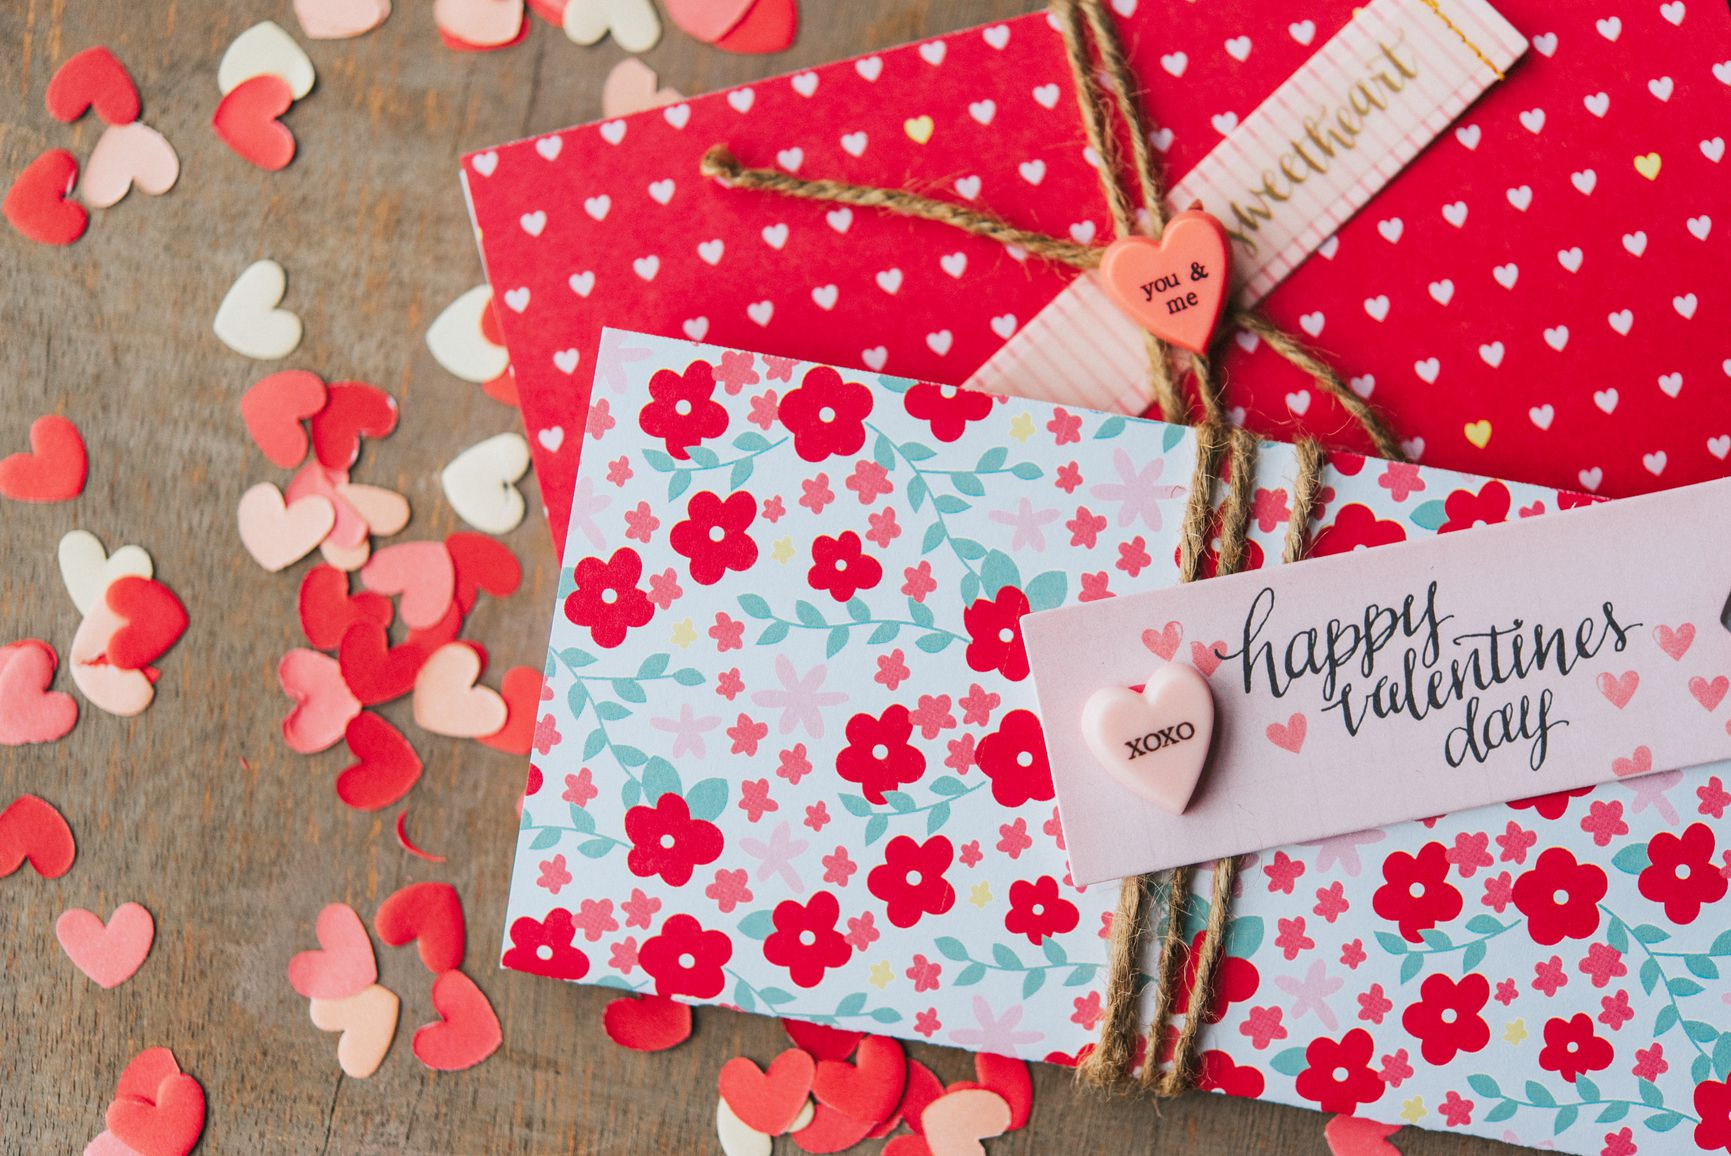 Valentines Day Card Ideas For Kids
 13 DIY Valentine s Day Card Ideas